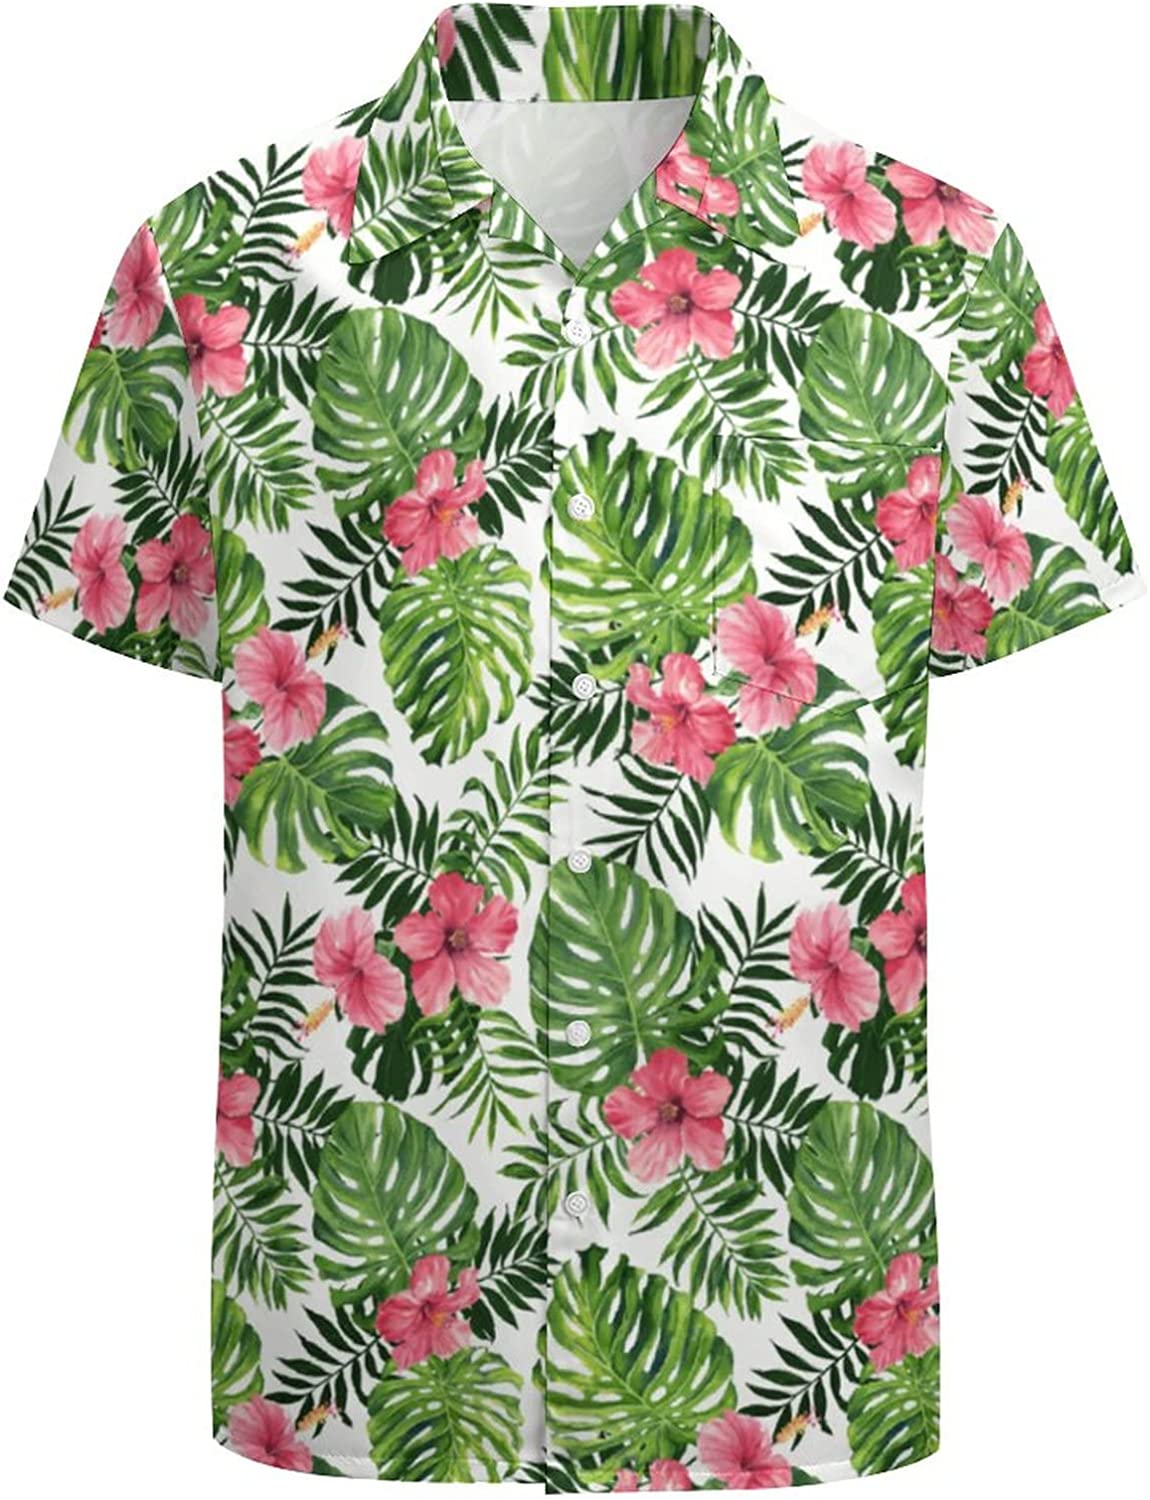 Artsadd 80s 90s Hawaiian Shirt for Men Big and Tall Button Down Short Sleeve Shirt Aloha Beach Shirts Disco Party Outfits